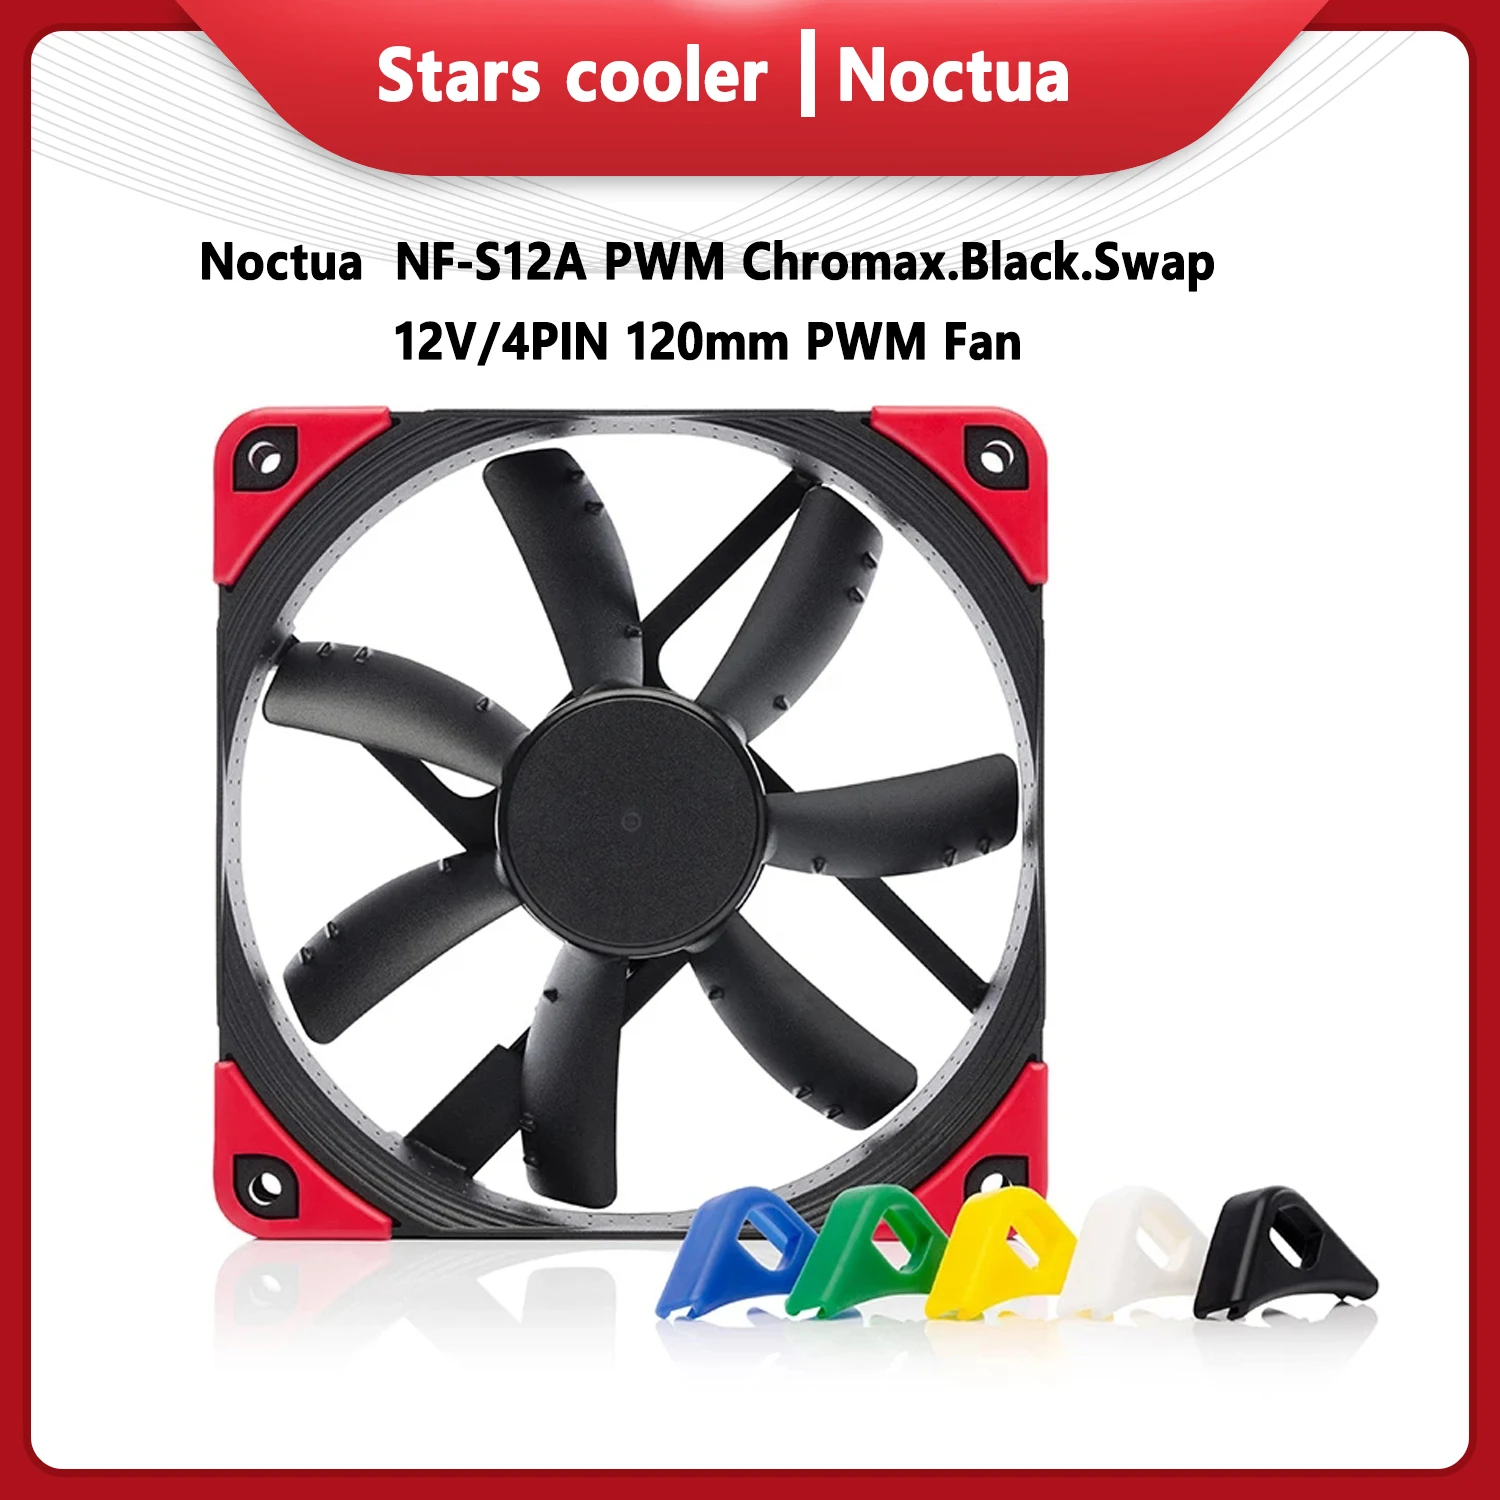 Noctua NF-S12A PWM chromax.black.swap CPU radiator computer case cooling fan 12V/4PIN 120mm PWM fan silent